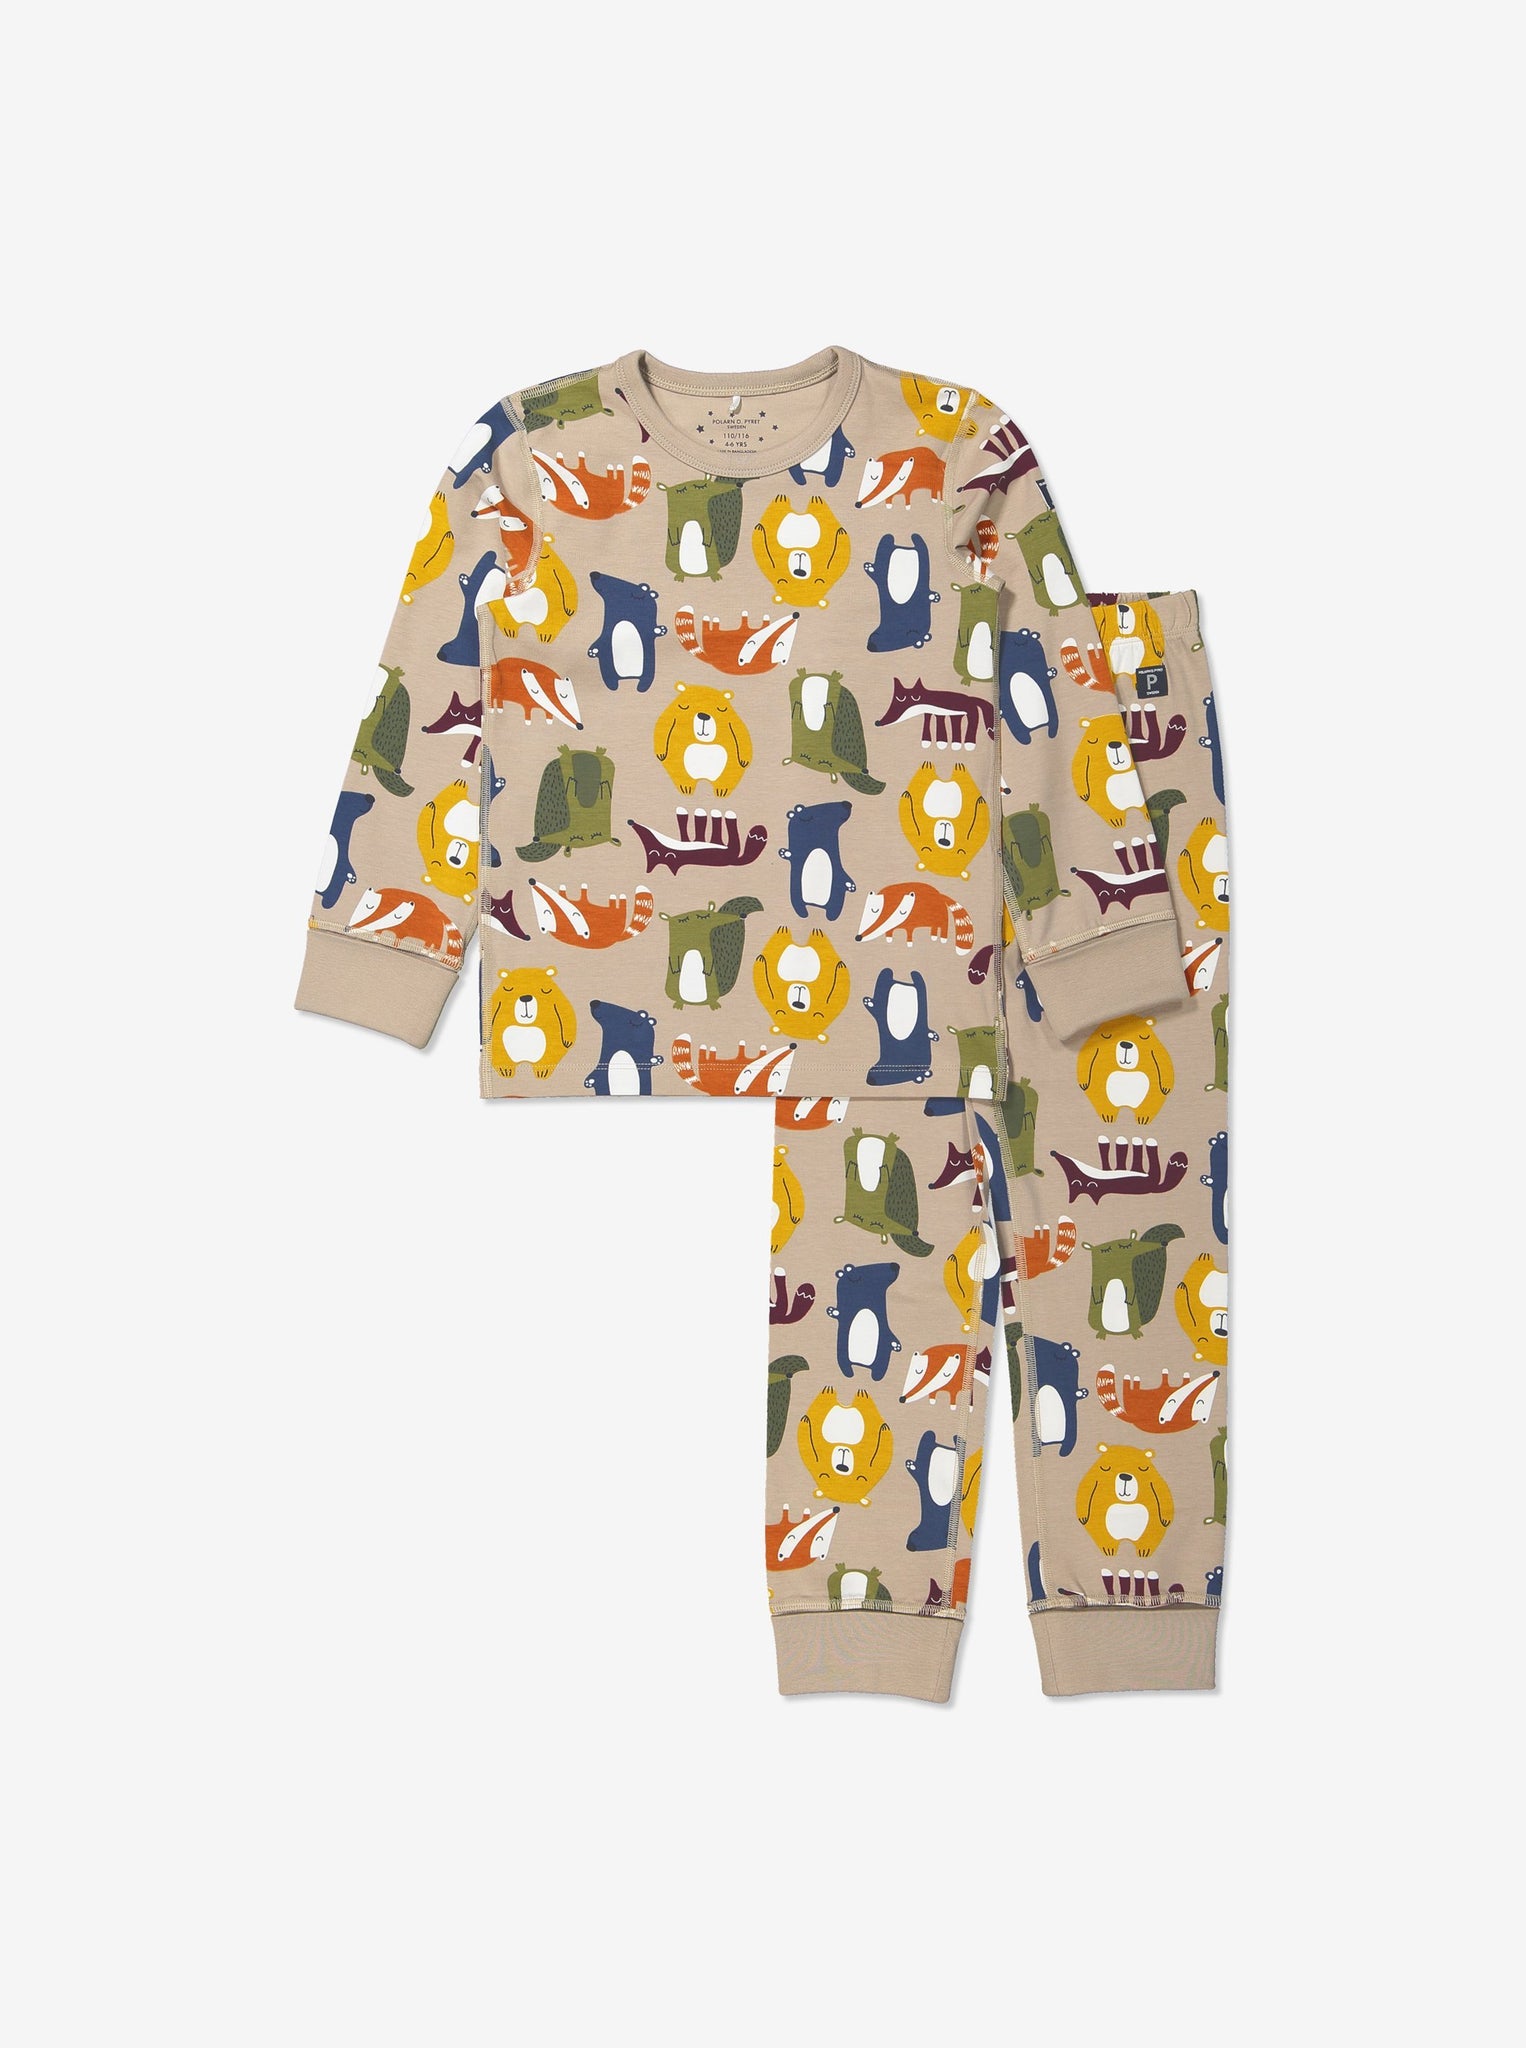 Organic Animal Print Boys Pyjamas, Ethical Kids Clothes| Polarn O. Pyret UK